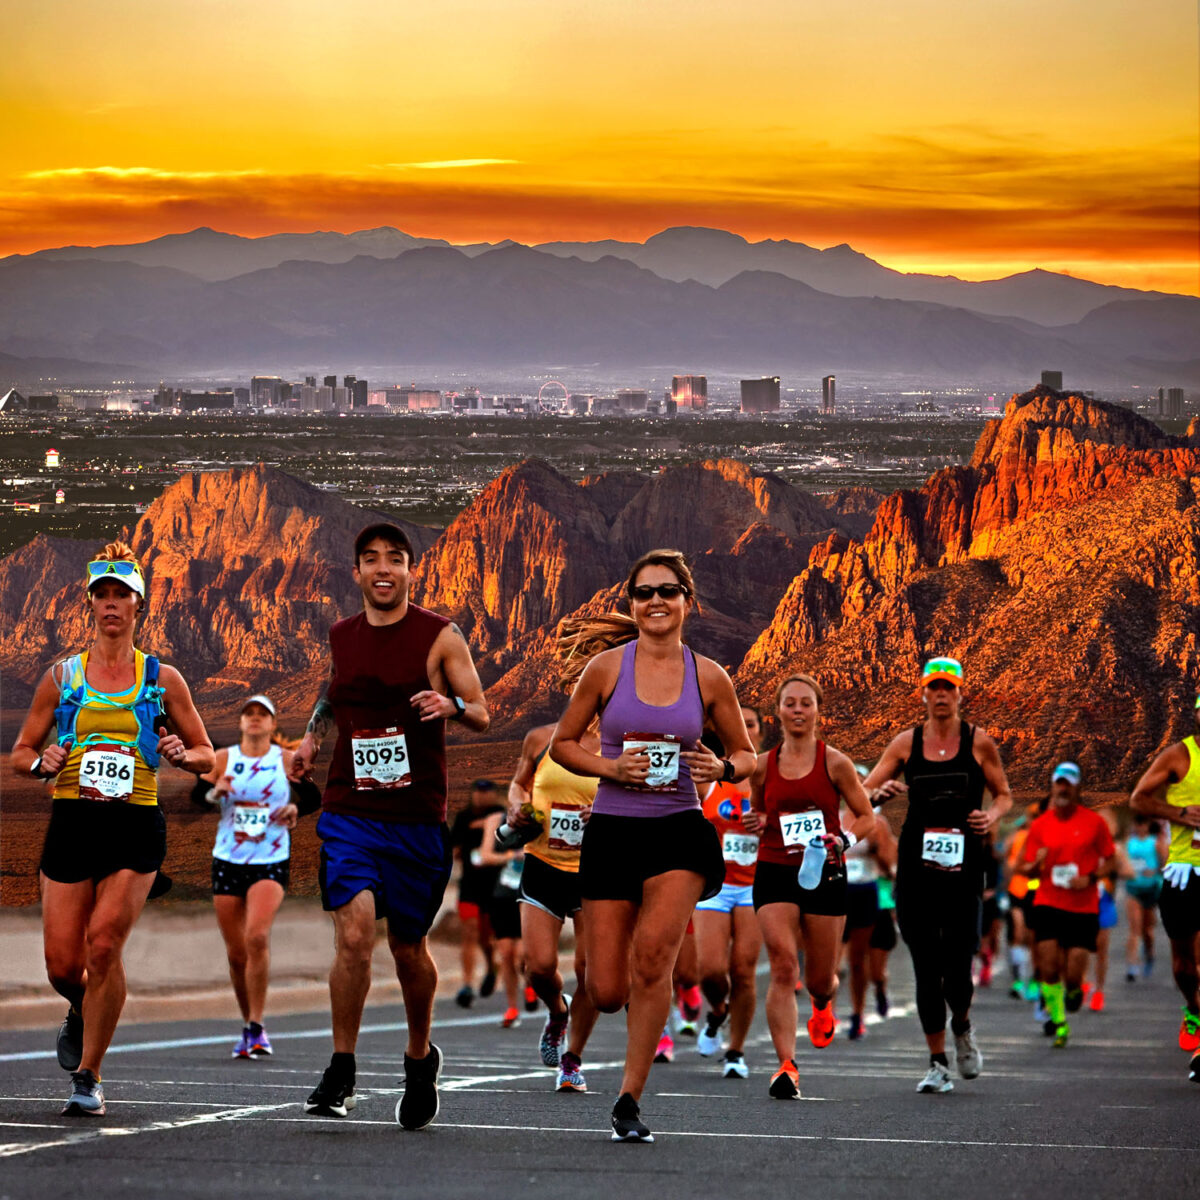 The inaugural Las Vegas Marathon is coming this November